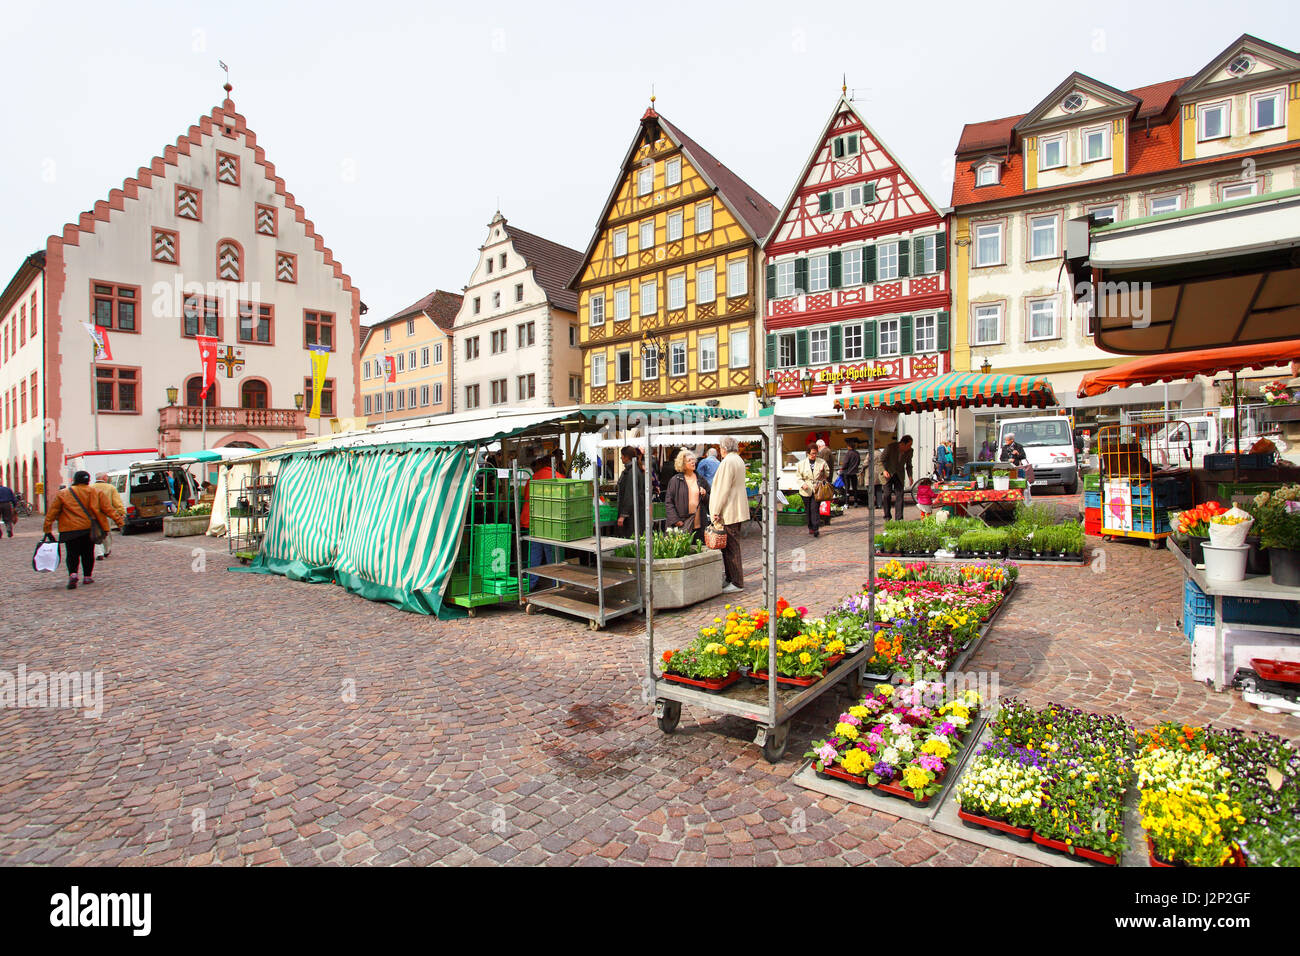 Bad Mergentheim, Germany - April 23, 2013: Marketplace of Bad Mergentheim town in Germany Stock Photo